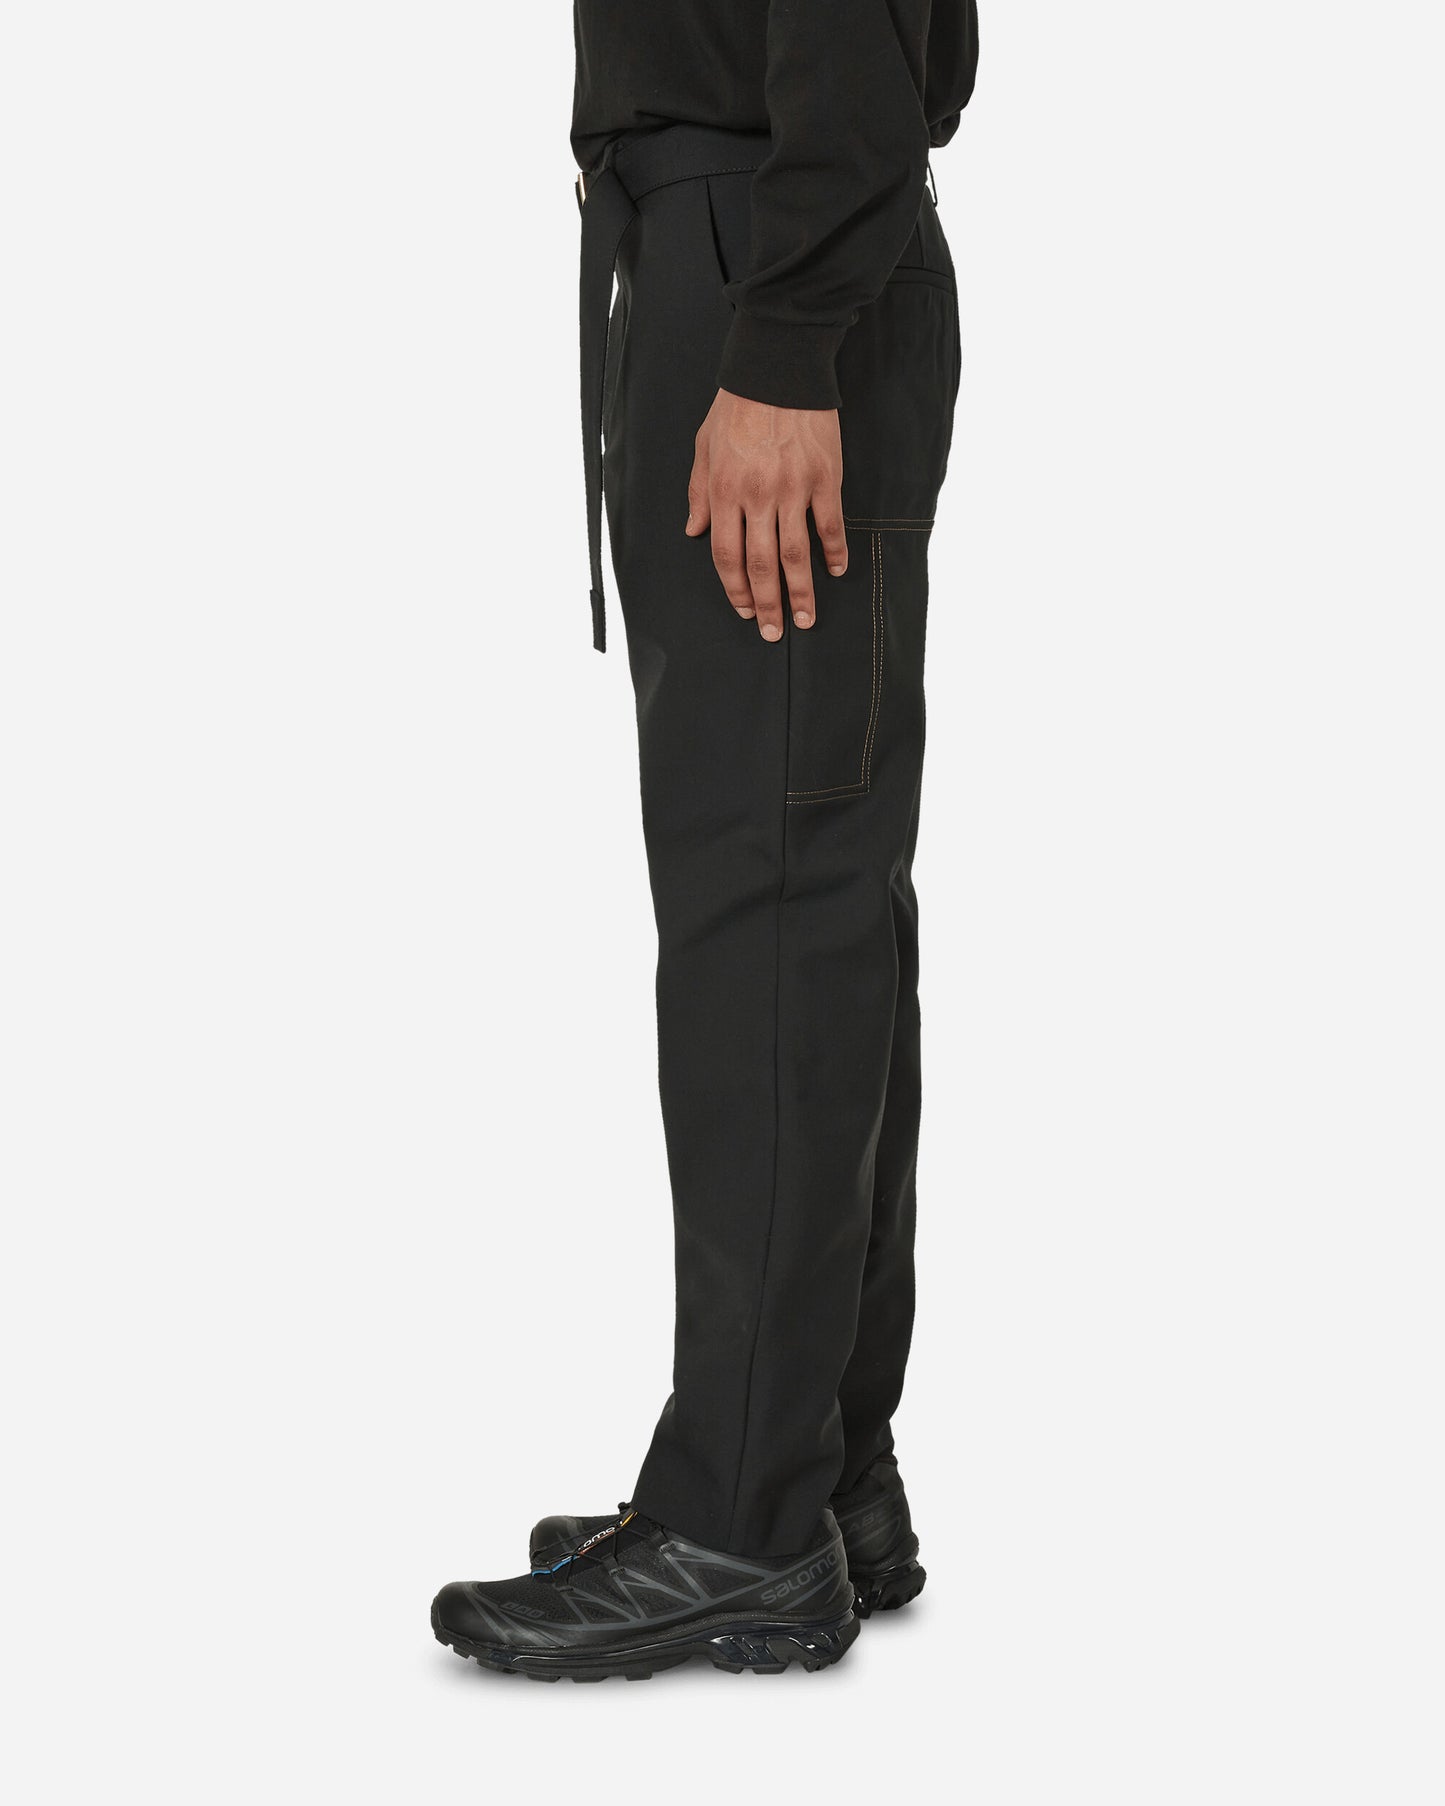 sacai Sacai X Carhartt Wip Suiting Bonding Pants Black Pants Trousers 24-03389M 001